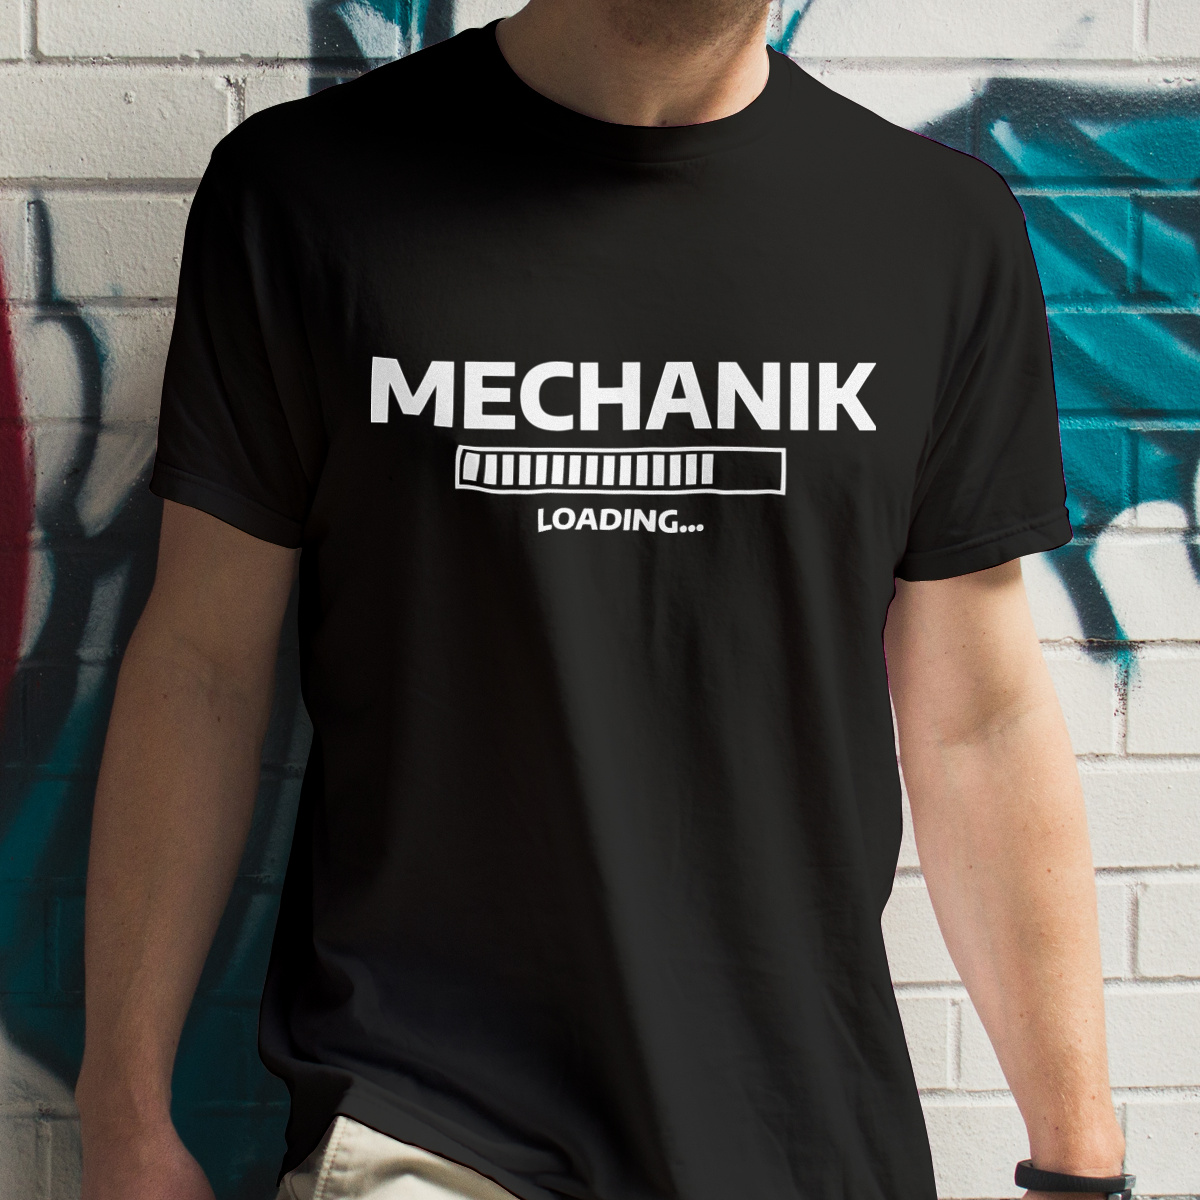 Mechanik Loading - Męska Koszulka Czarna